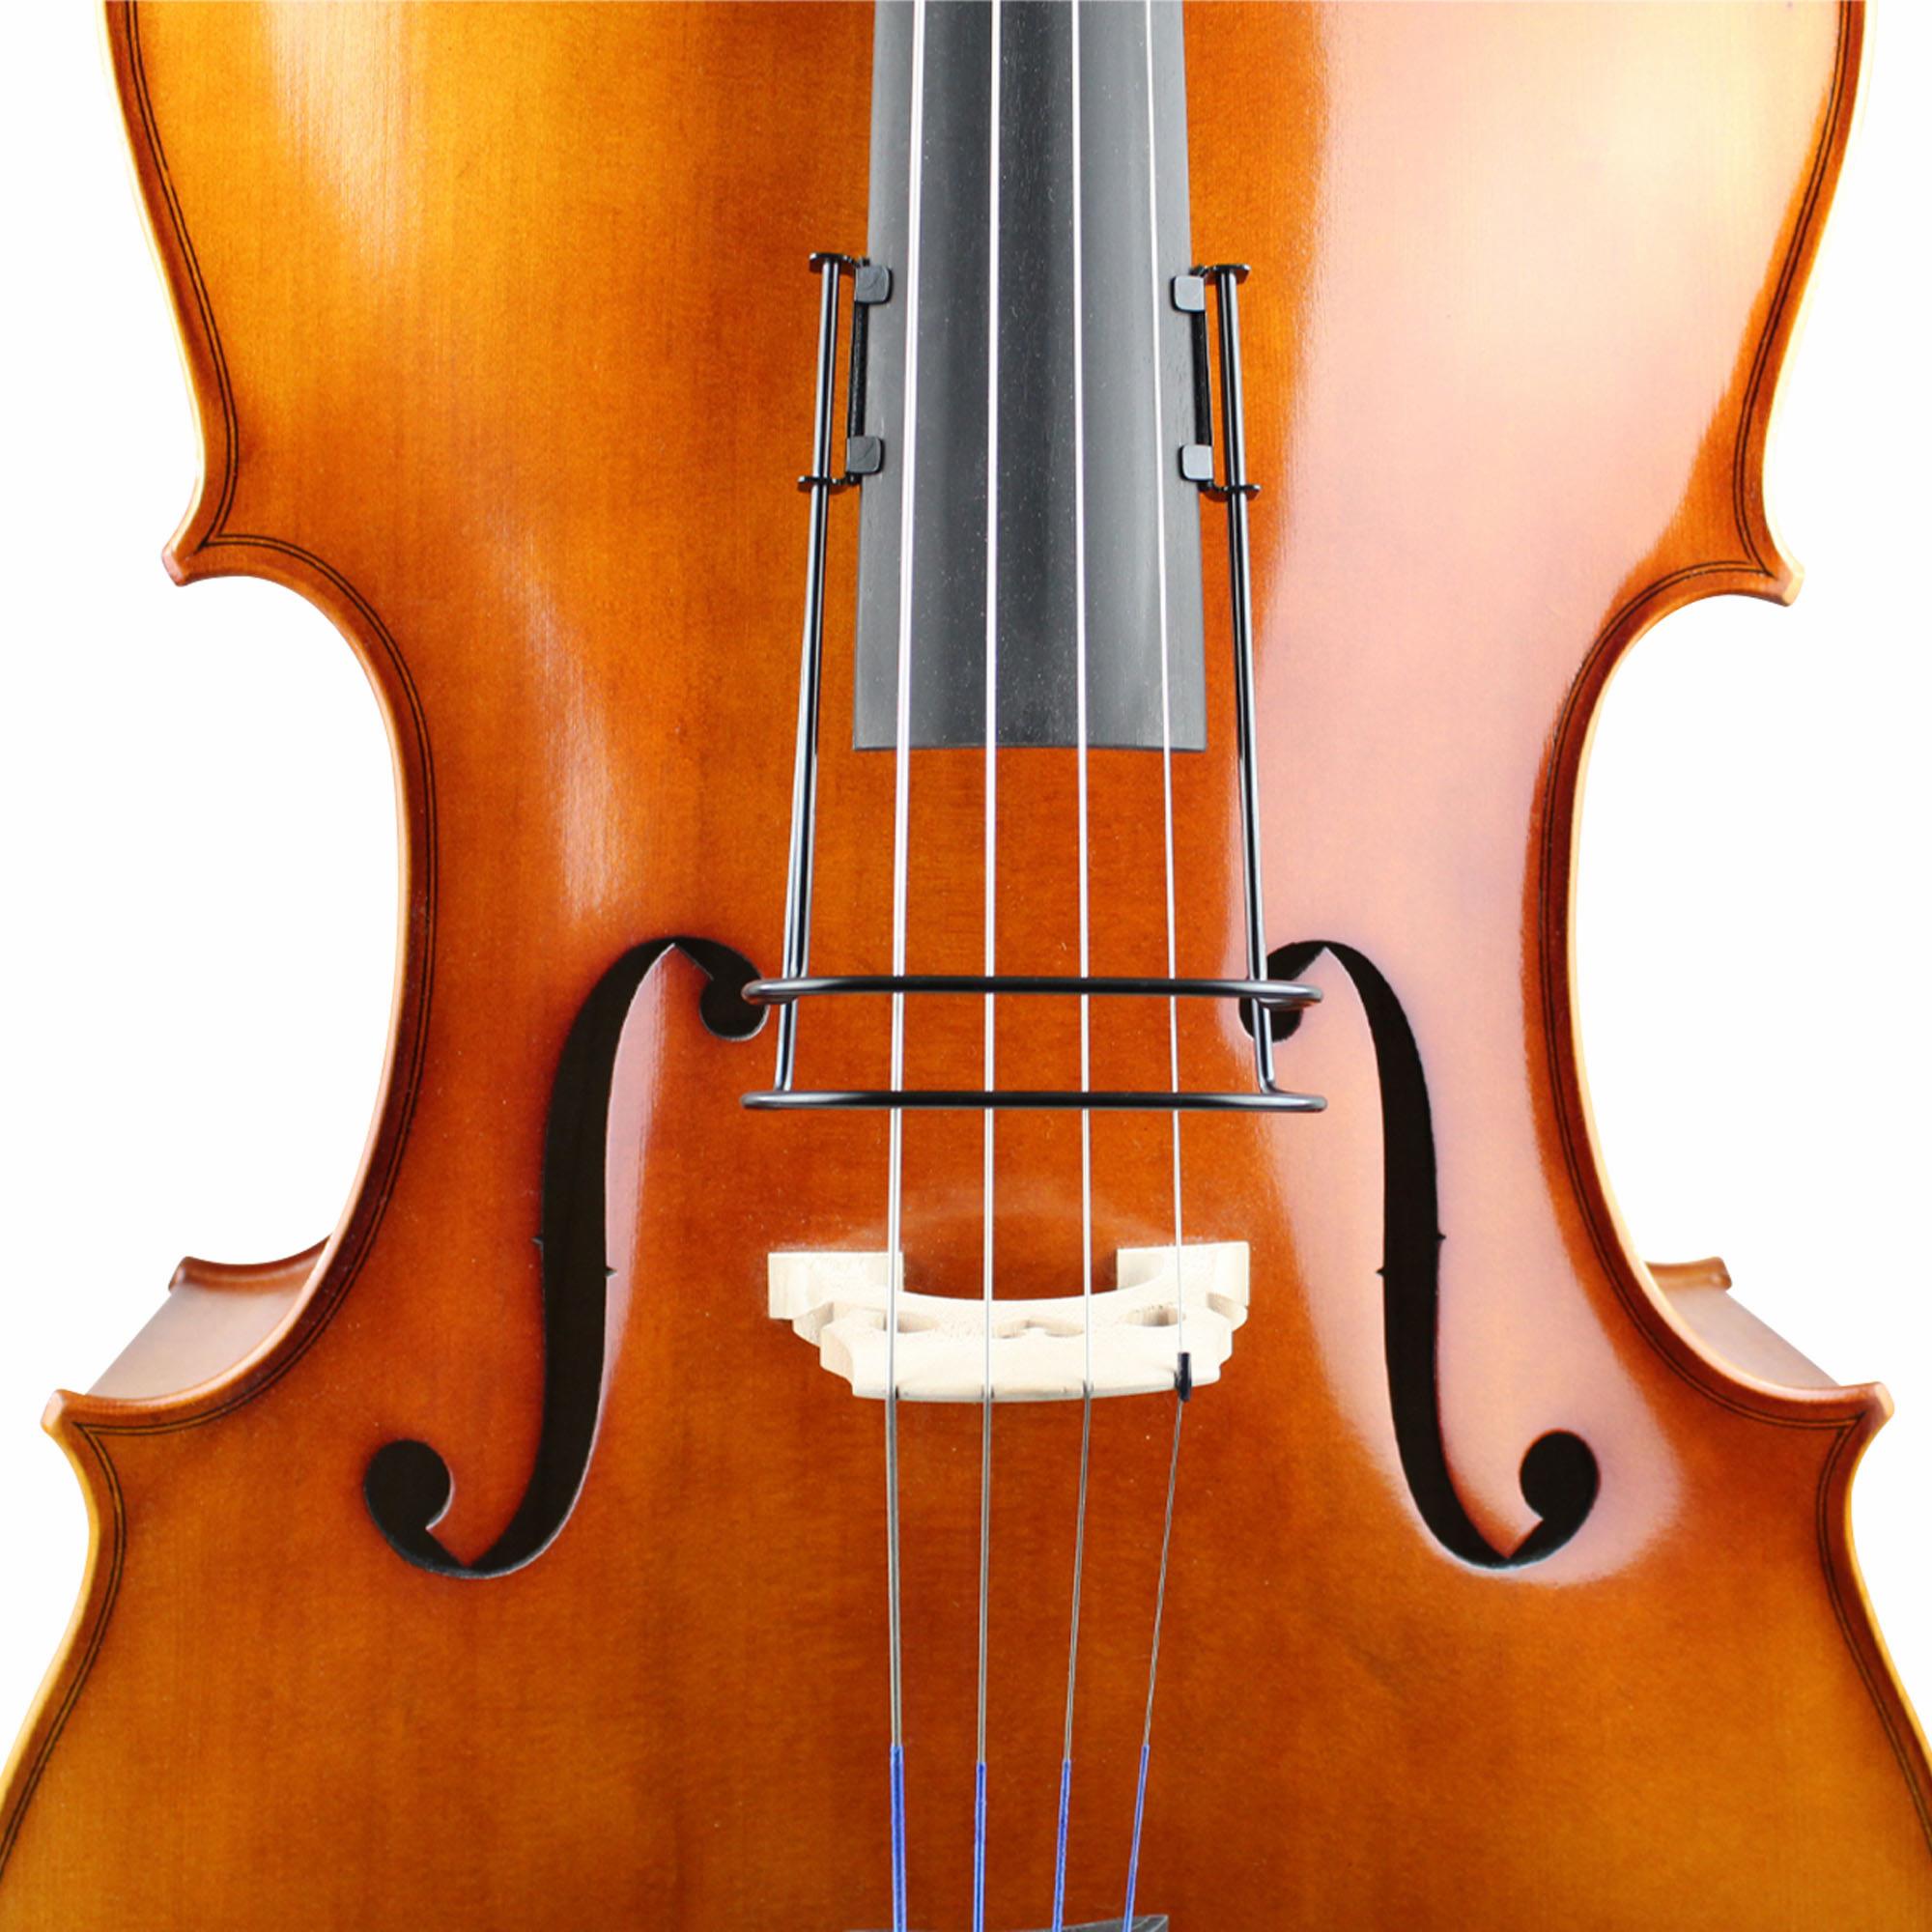 Konig Metall Cello Bow Guide